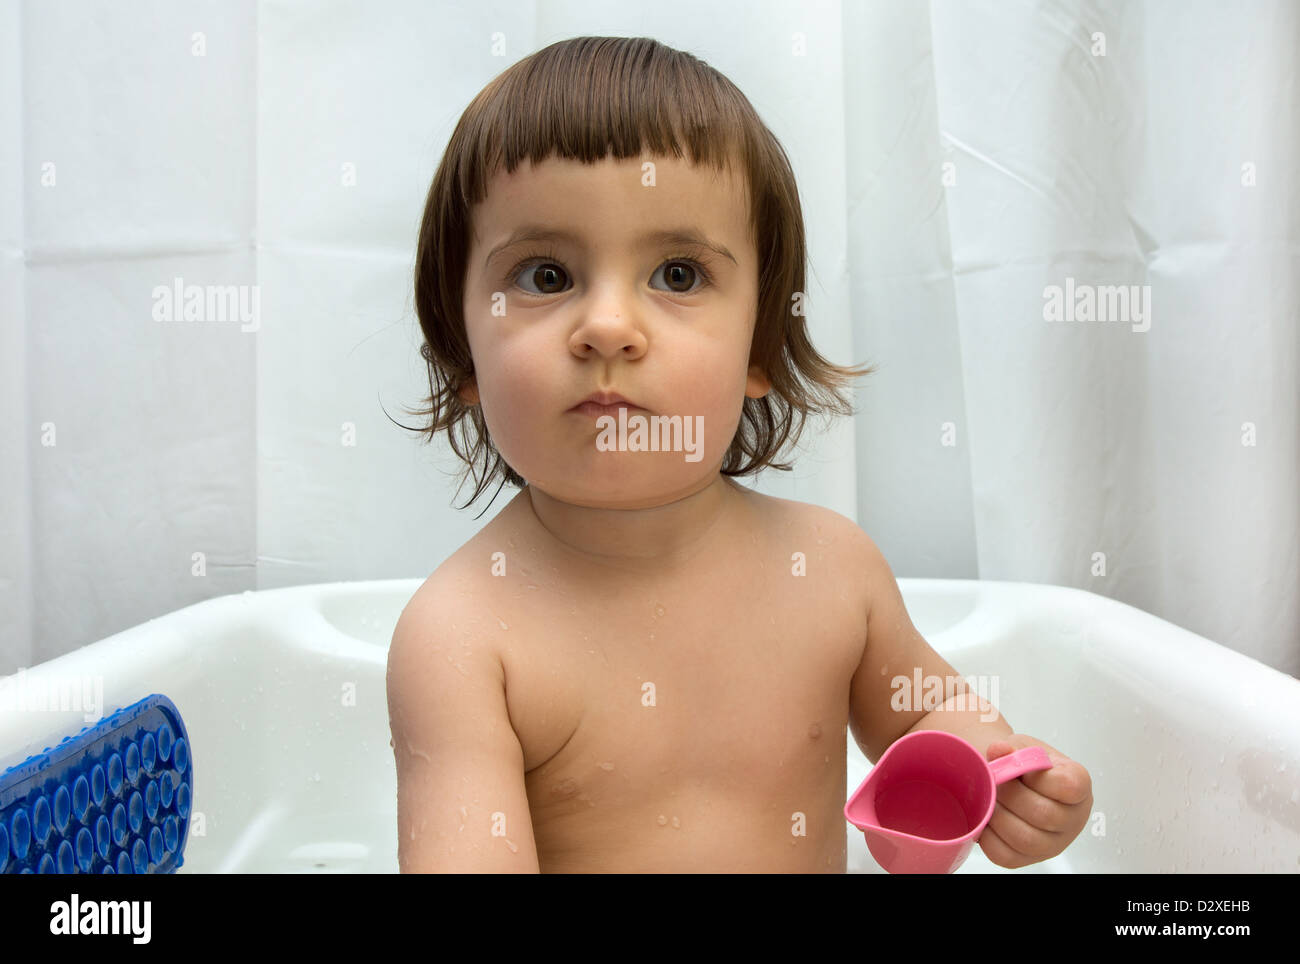 Child in the bathroom Stock Photo